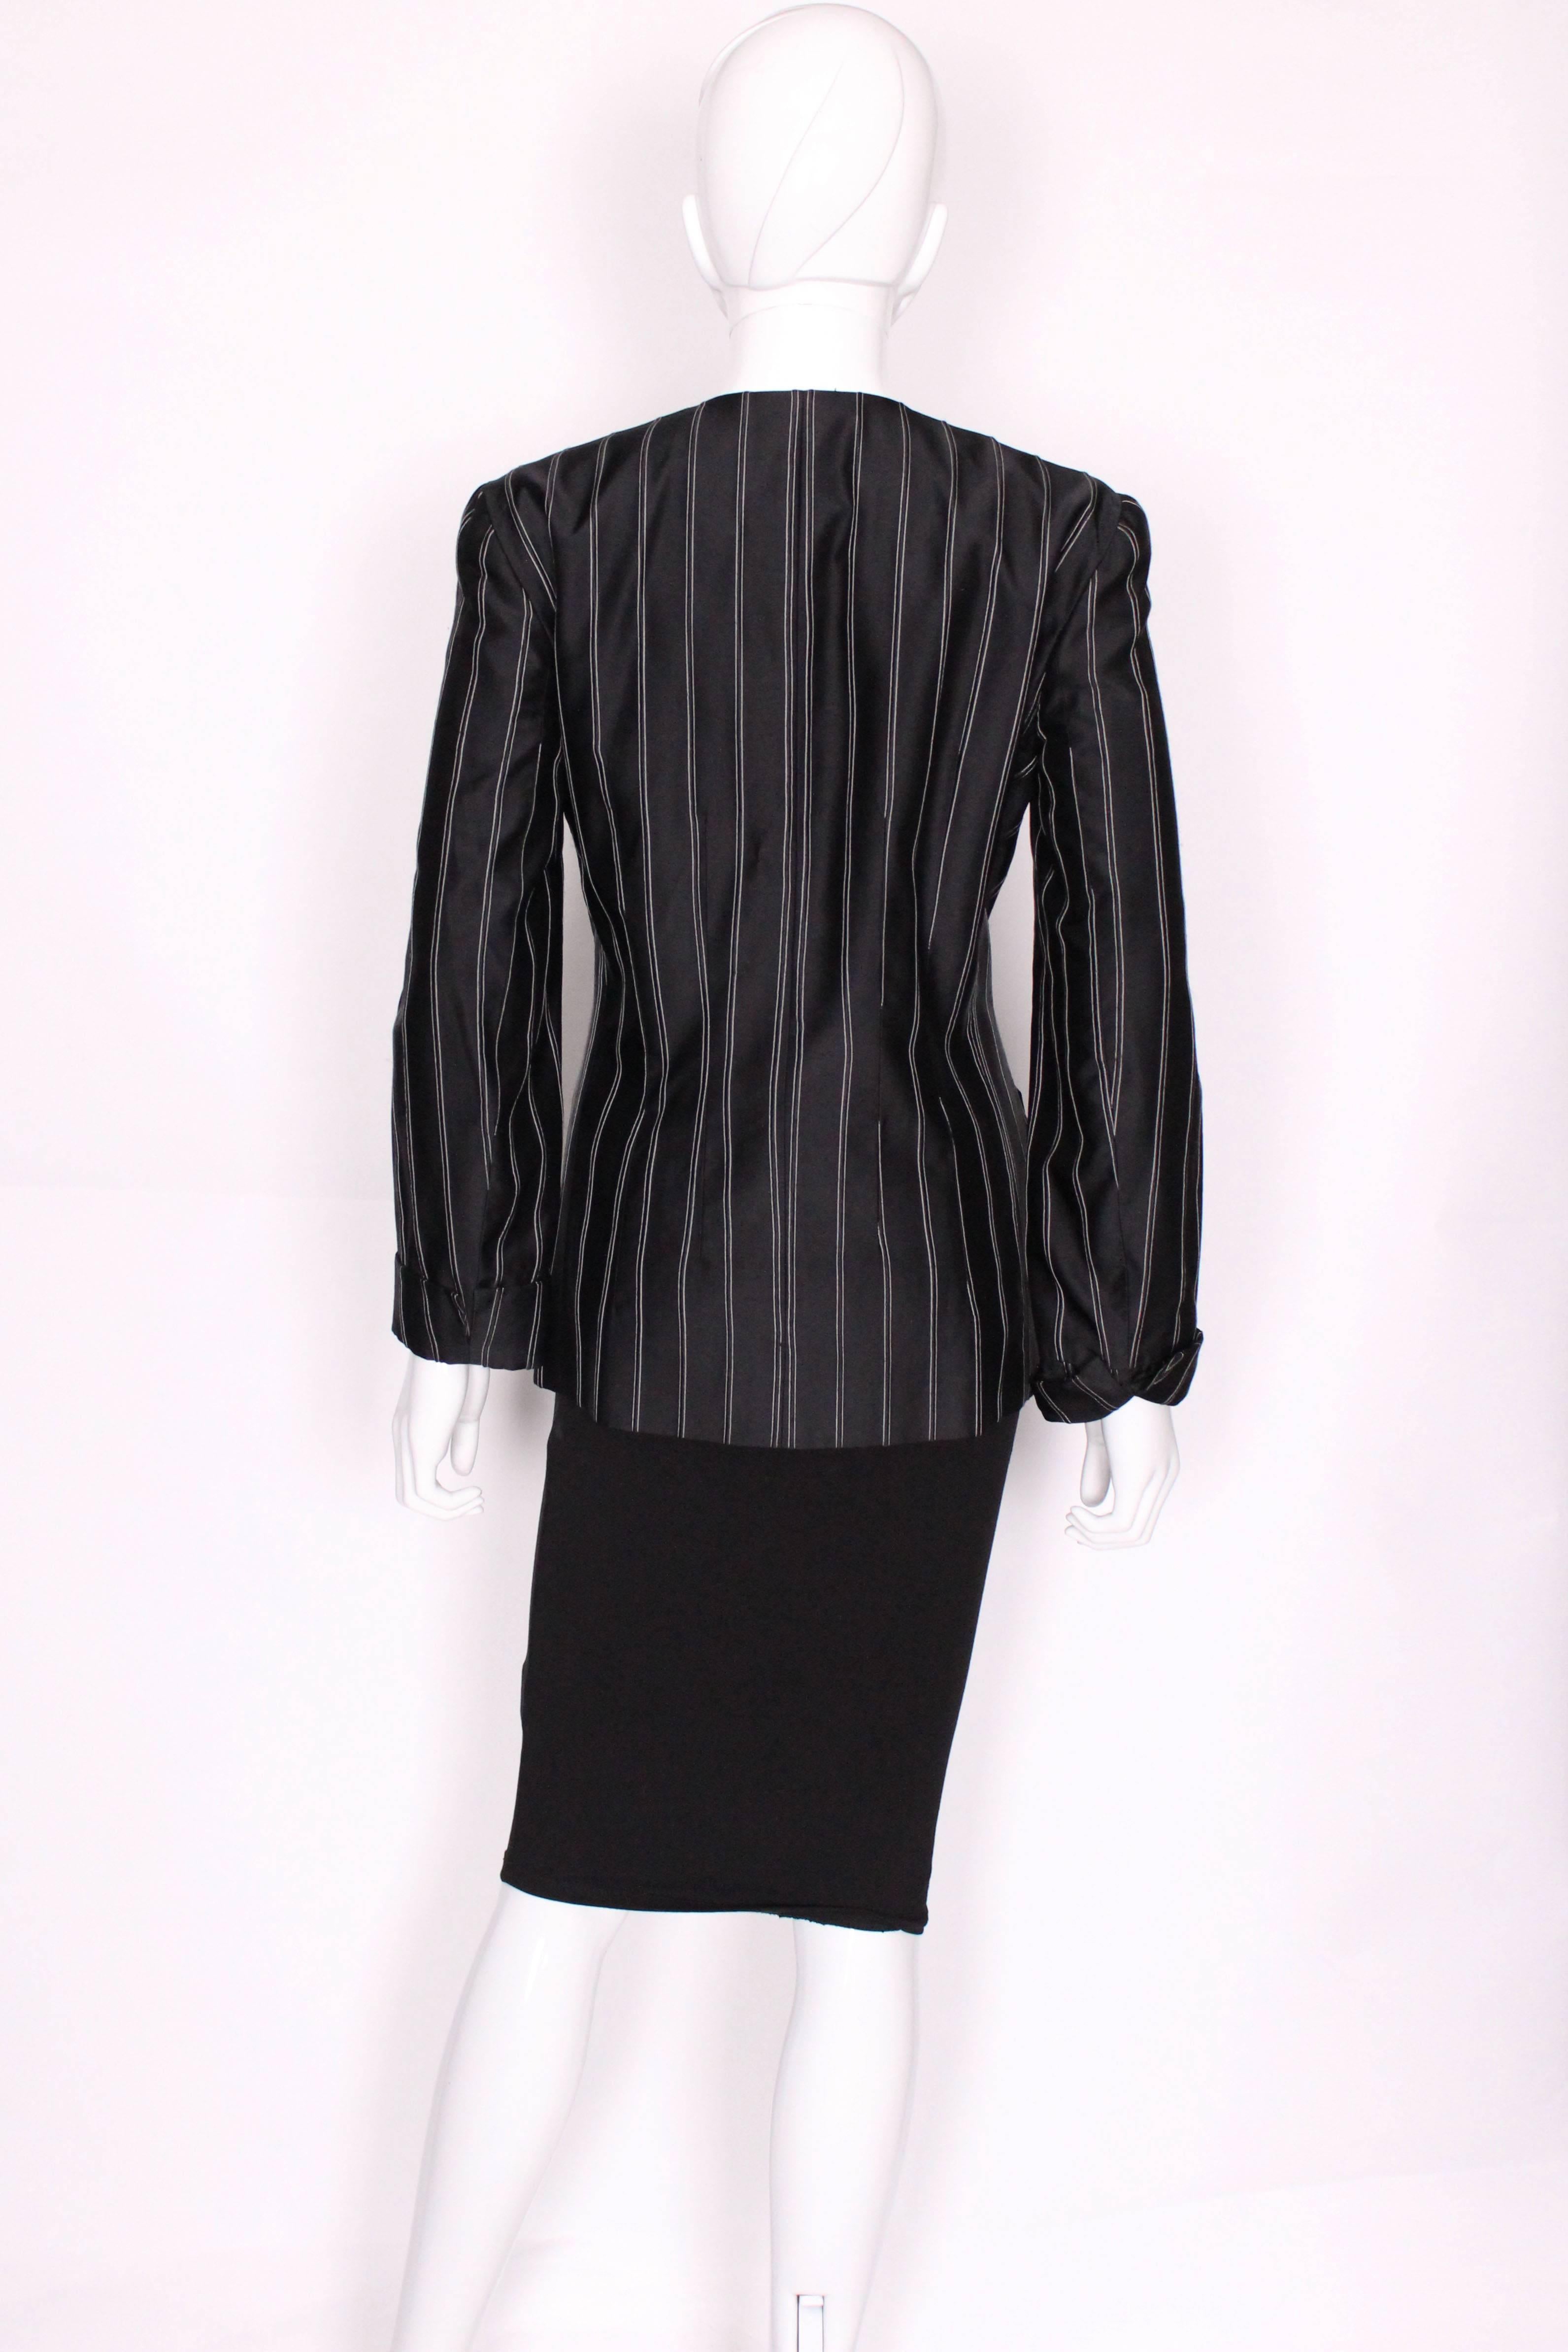 Women's Vintage Gucci Double Stripe Jacket